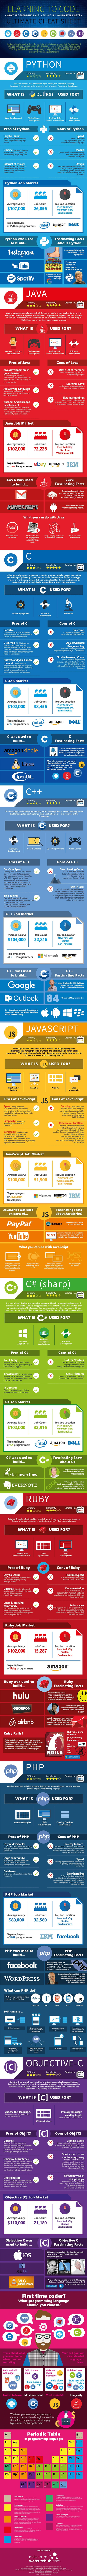 Трябва ли да научите Python, C или Ruby да бъде топ кодер? (Инфографика)